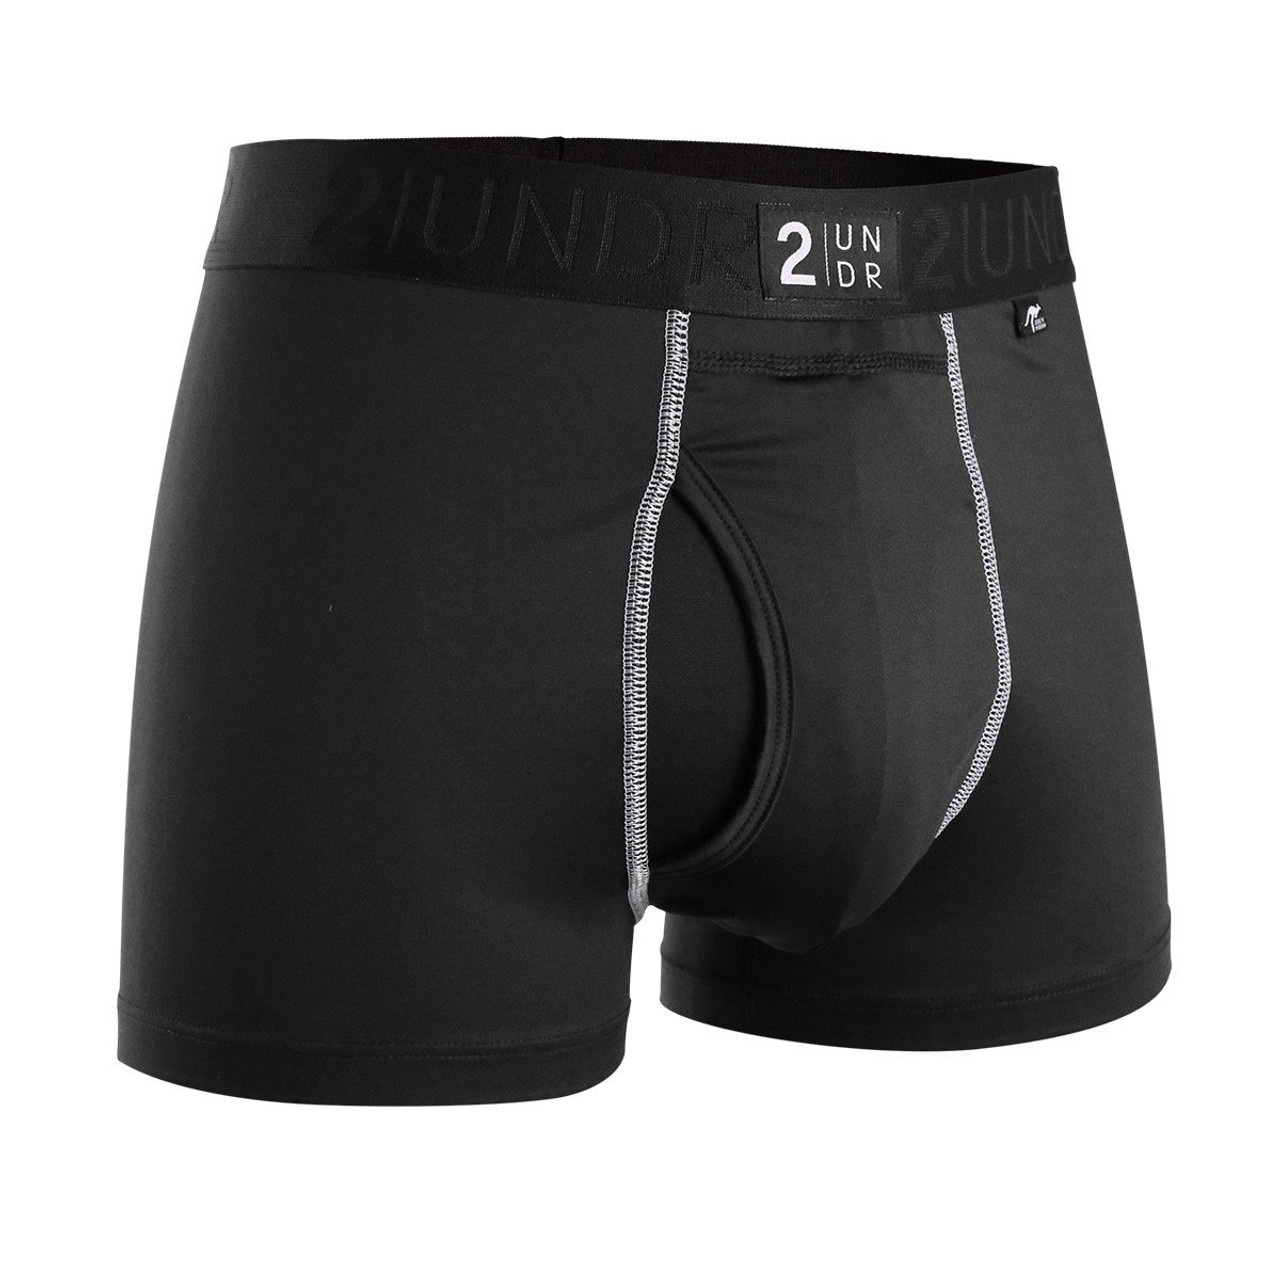 Comfortable & Soft Fila Boxer Underwear For Man - Under Wear For Men